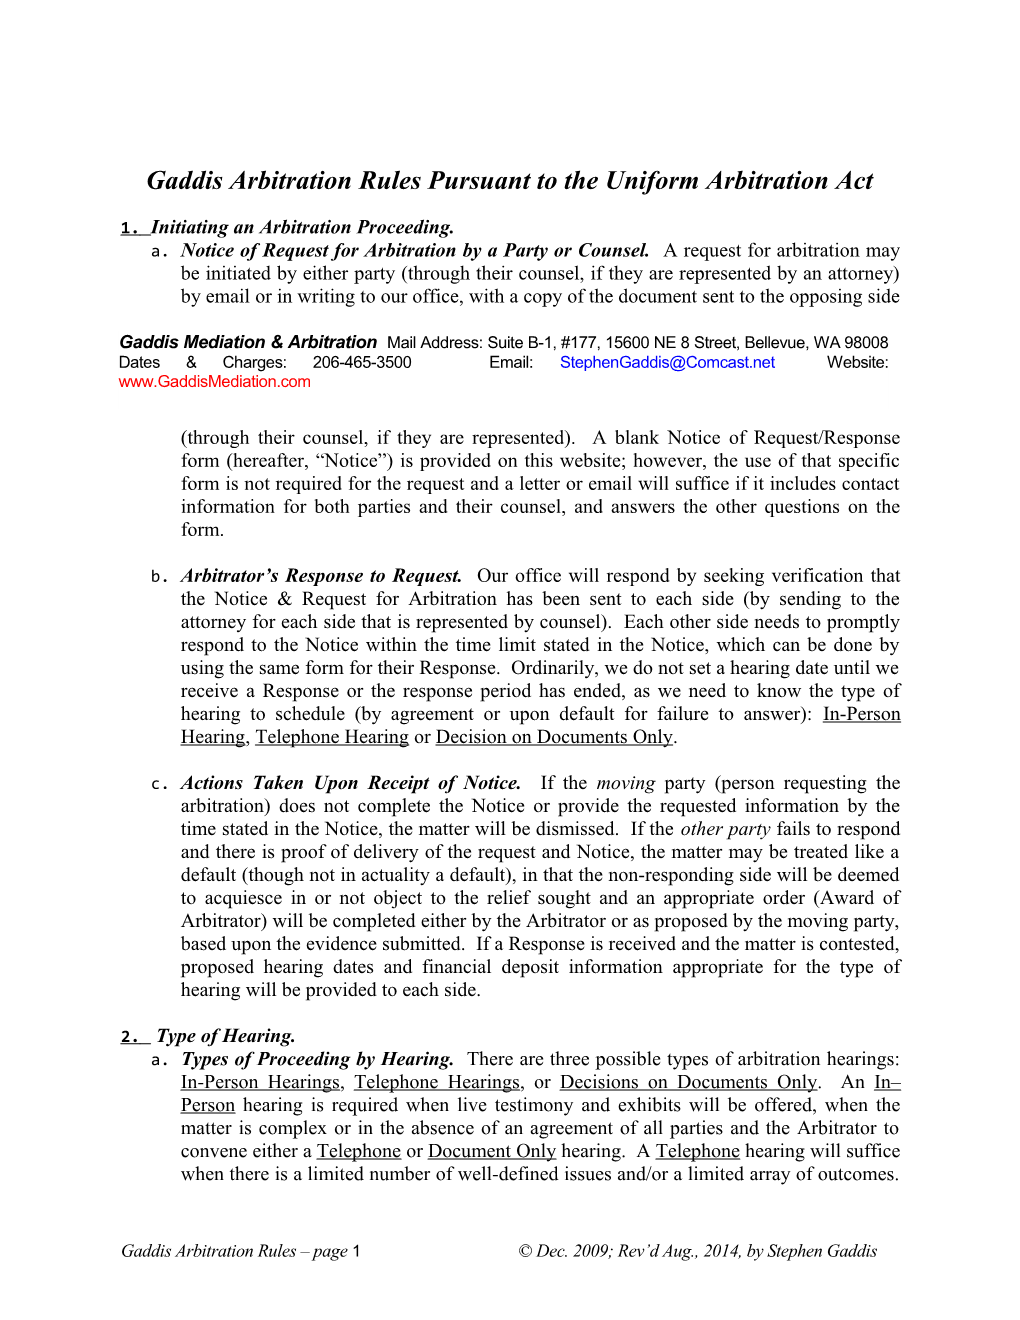 Gaddis Arbitration Rulespursuant to the Uniform Arbitration Act